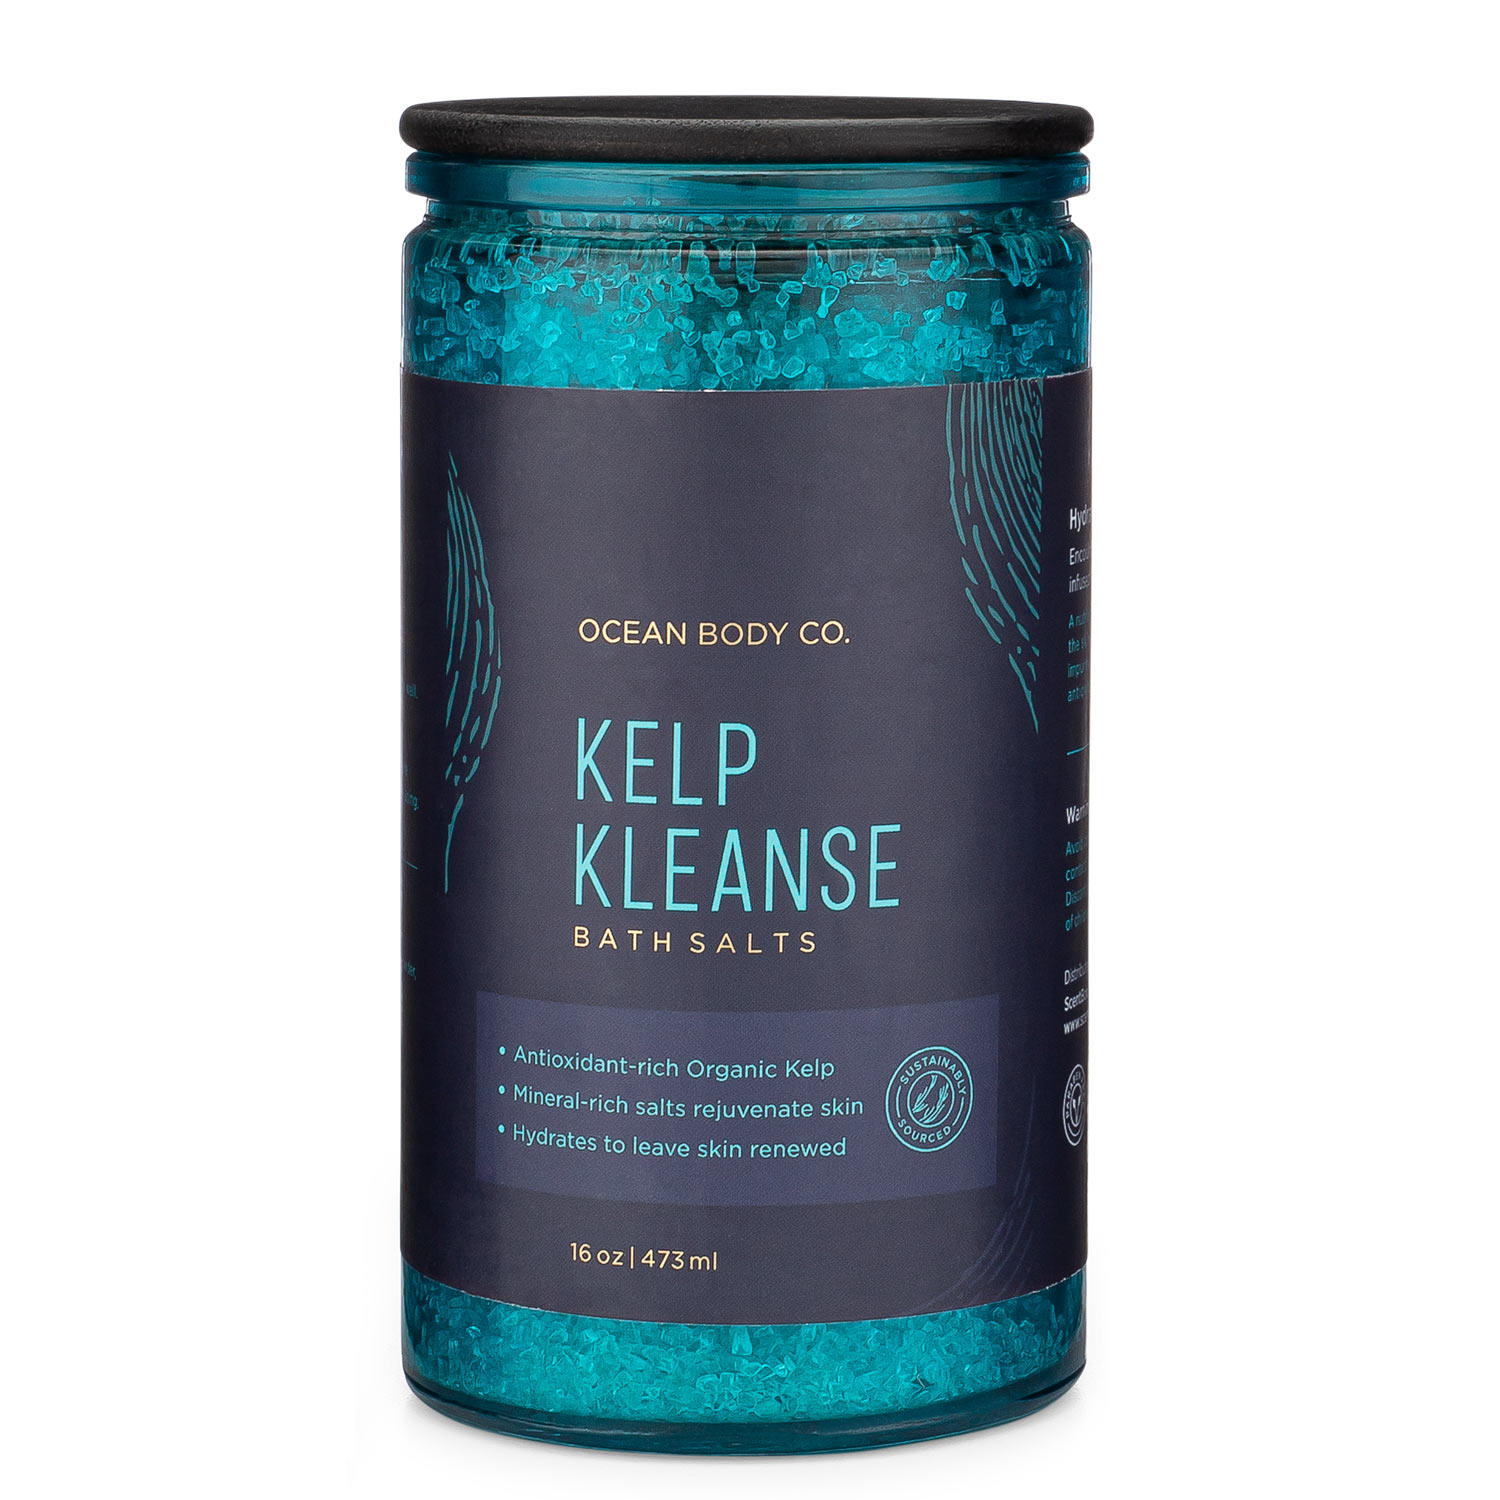 Kelp Kleanse Bath Salts Ocean Body Co. Image